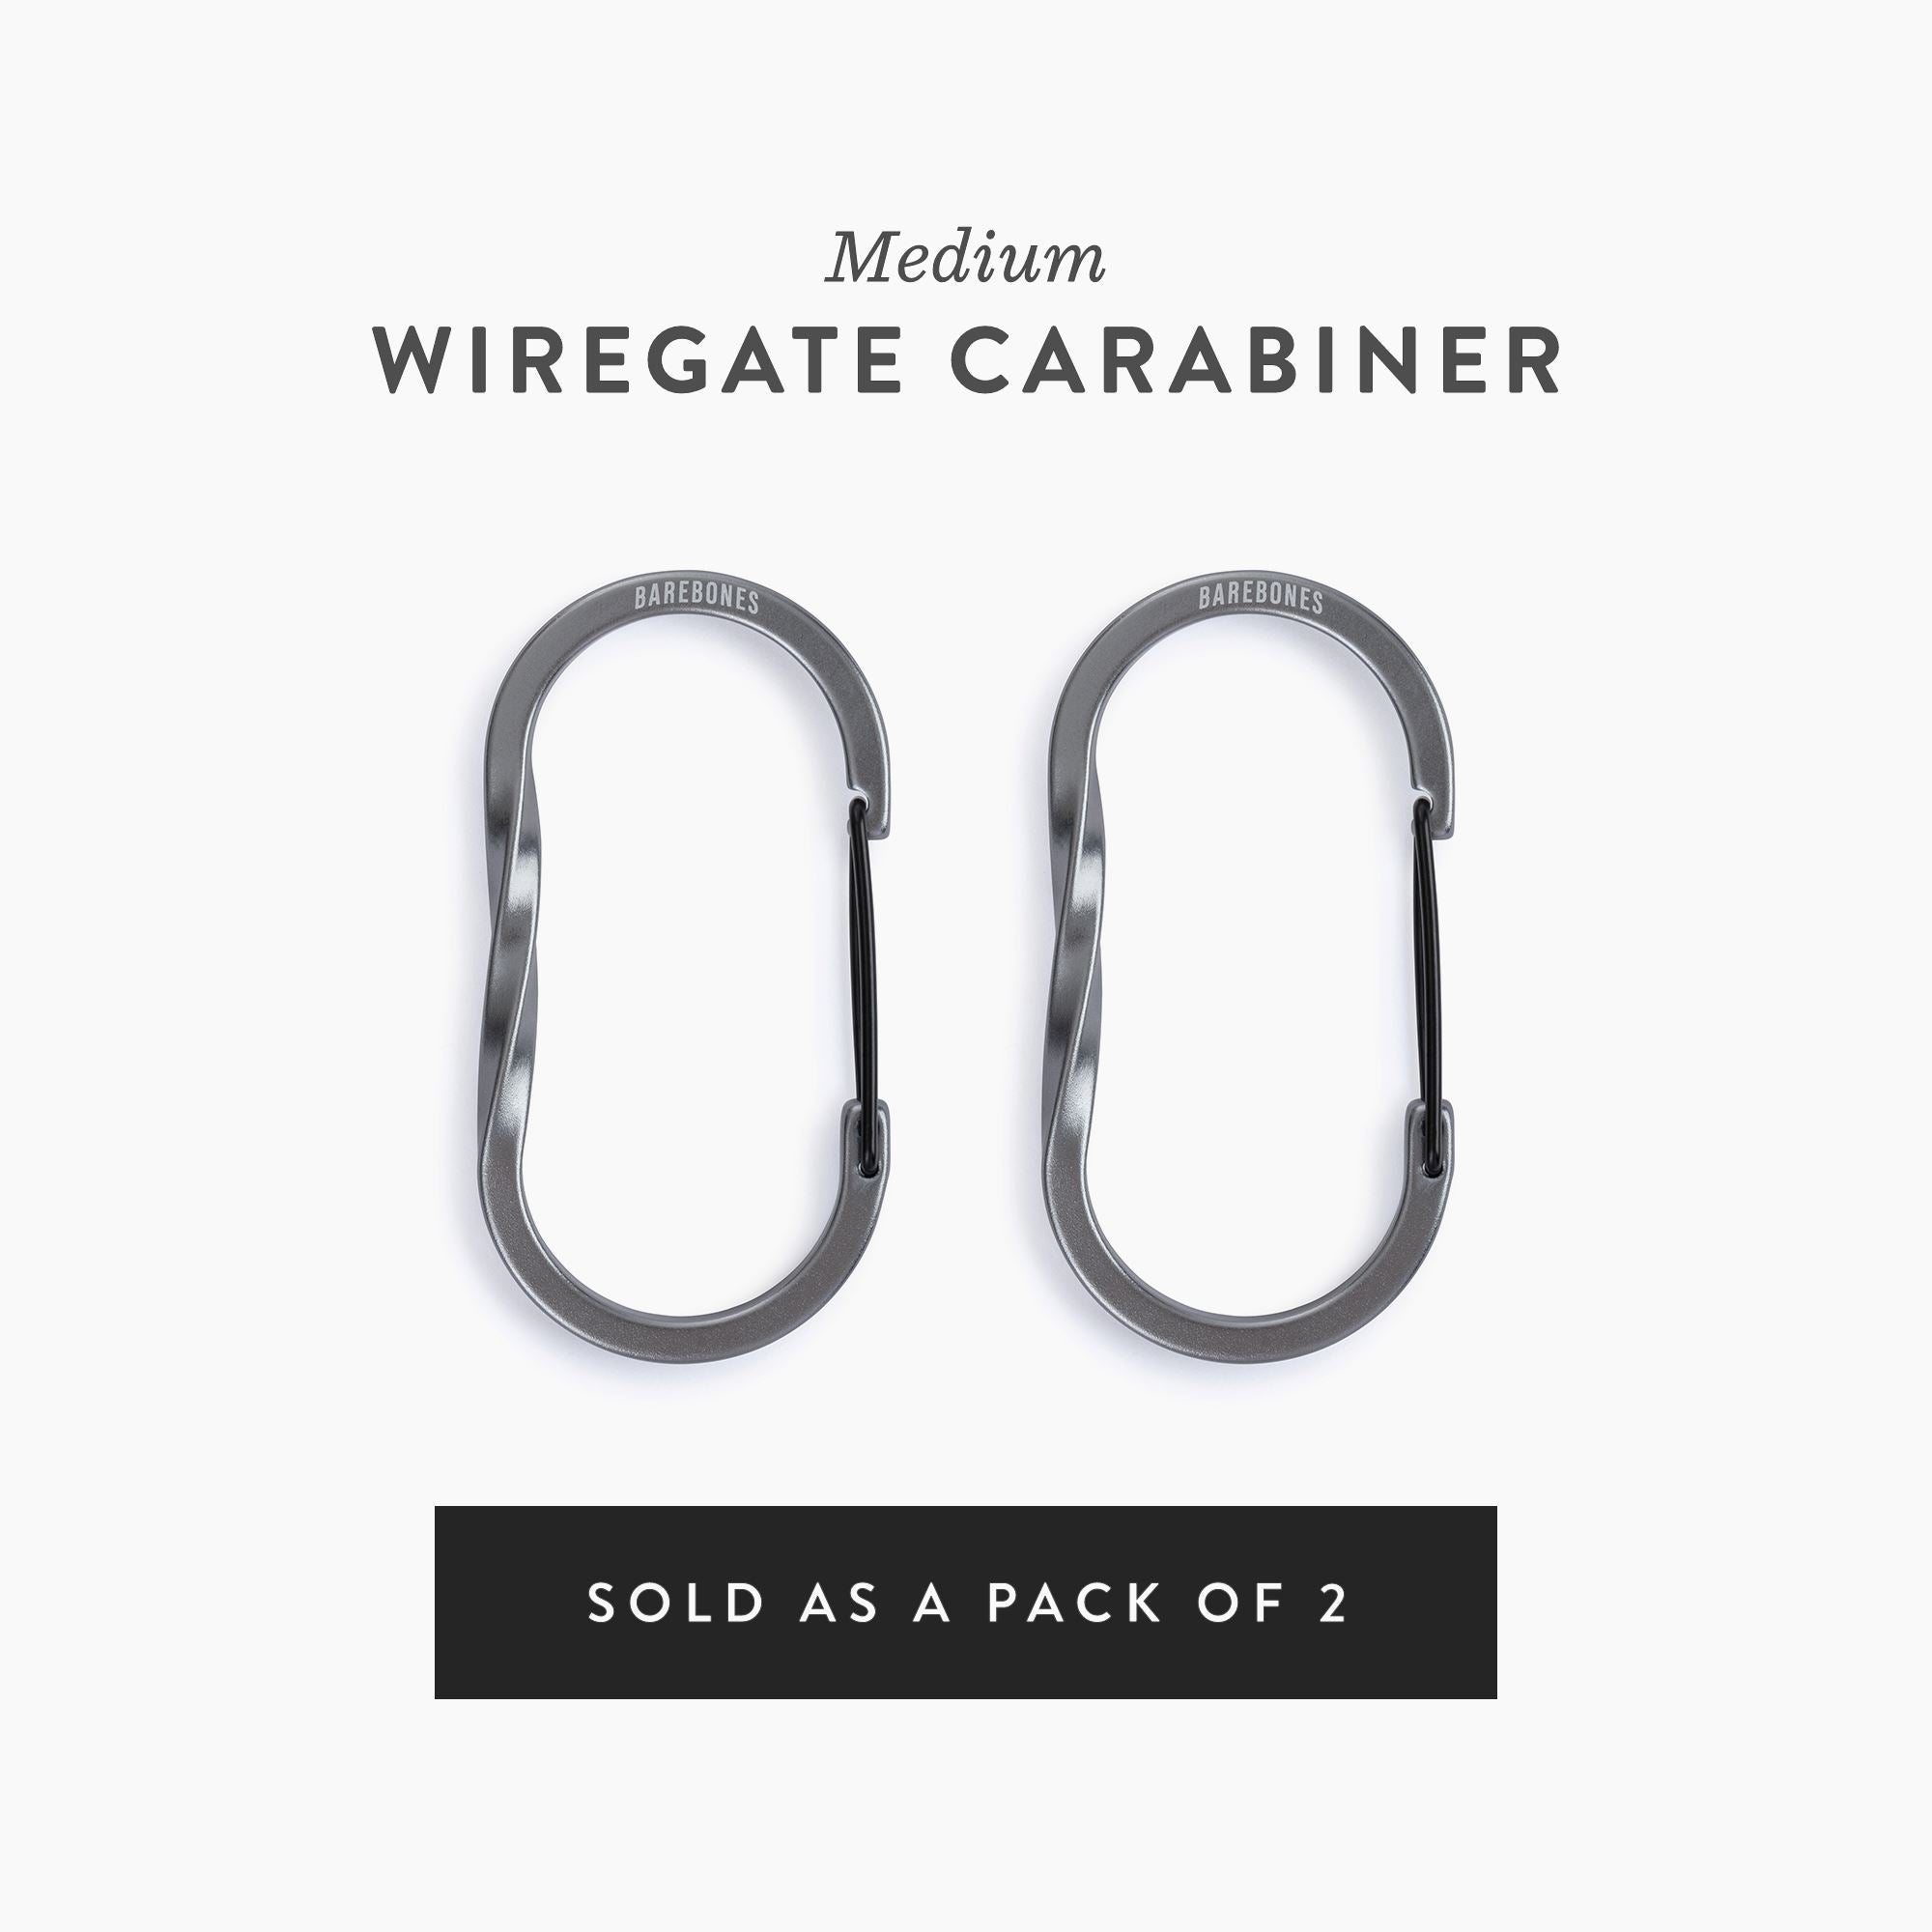 WIREGATE CARABINER - Medium